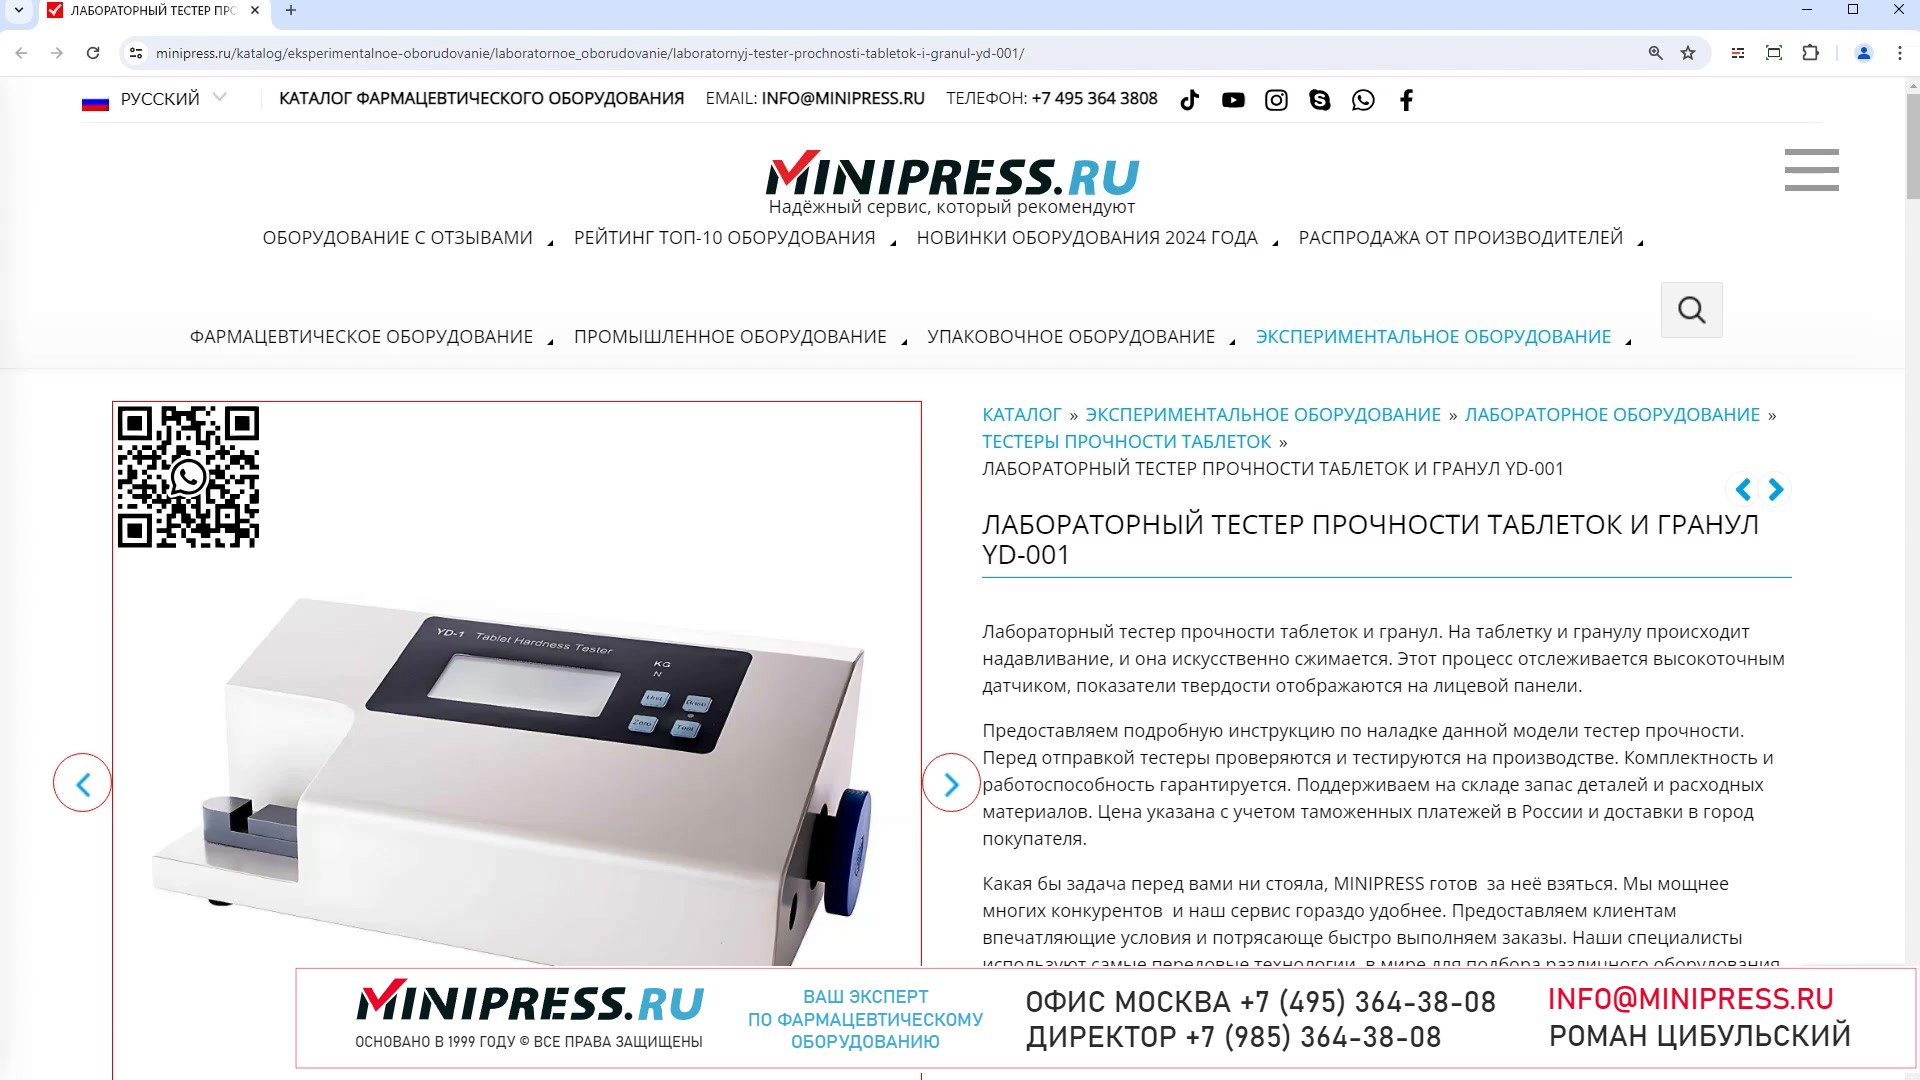 Minipress.ru Лабораторный тестер прочности таблеток и гранул YD-001